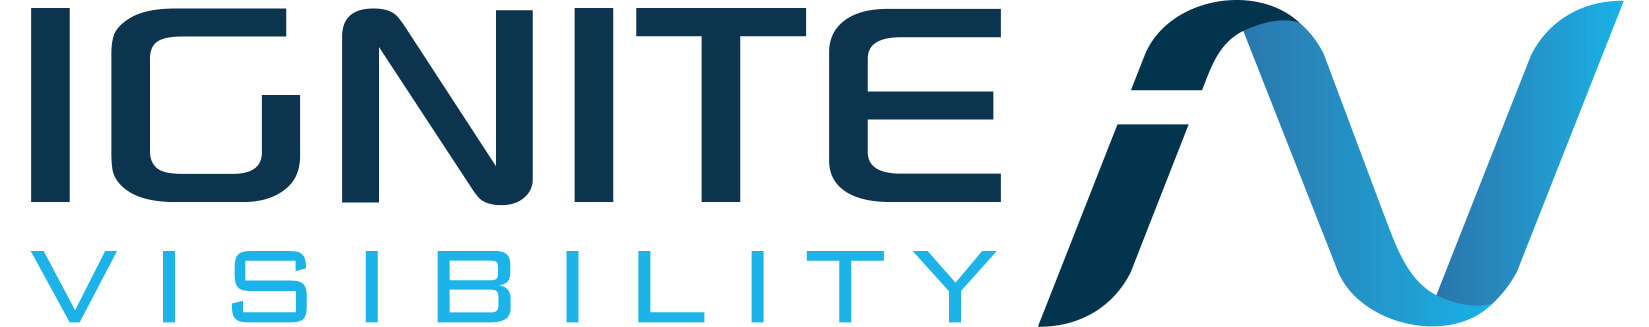 Best San Diego SEO Firm Logo: Ignite Visibility